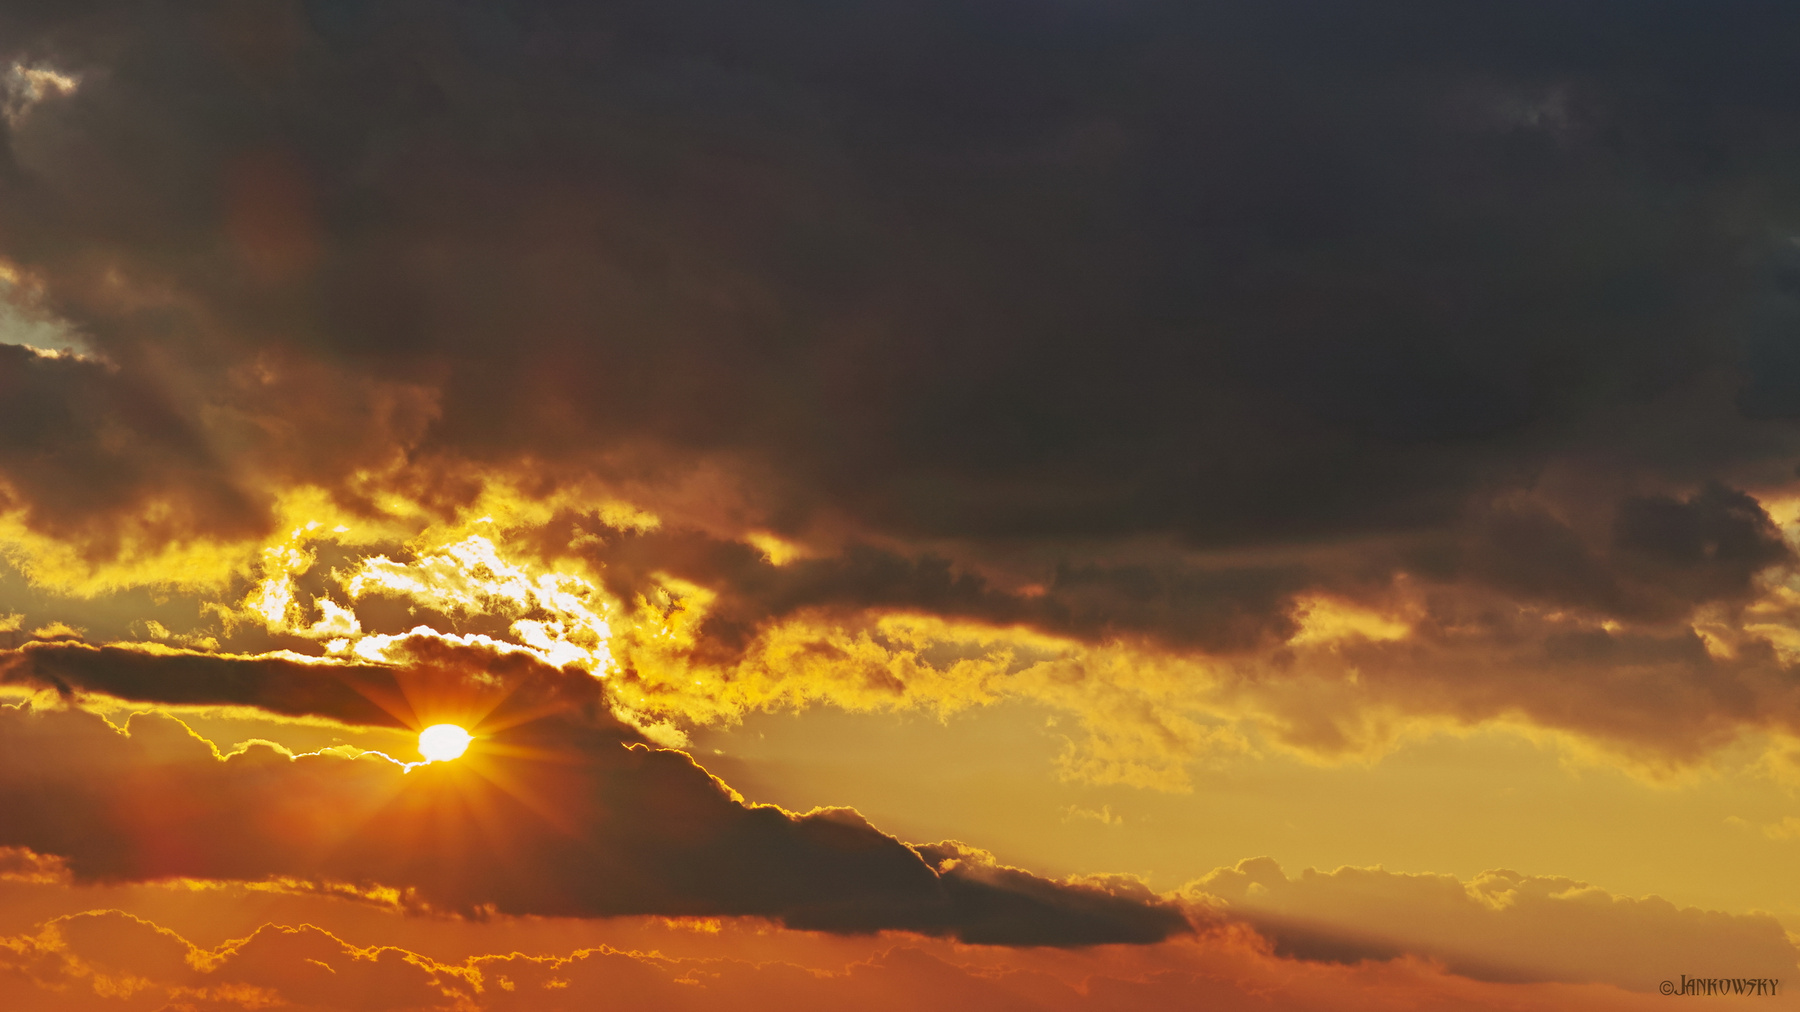 Бездна Омского  неба 18.10.20 Sigma dp3 Quattro foveon закат солнце облачность омск лучи свет